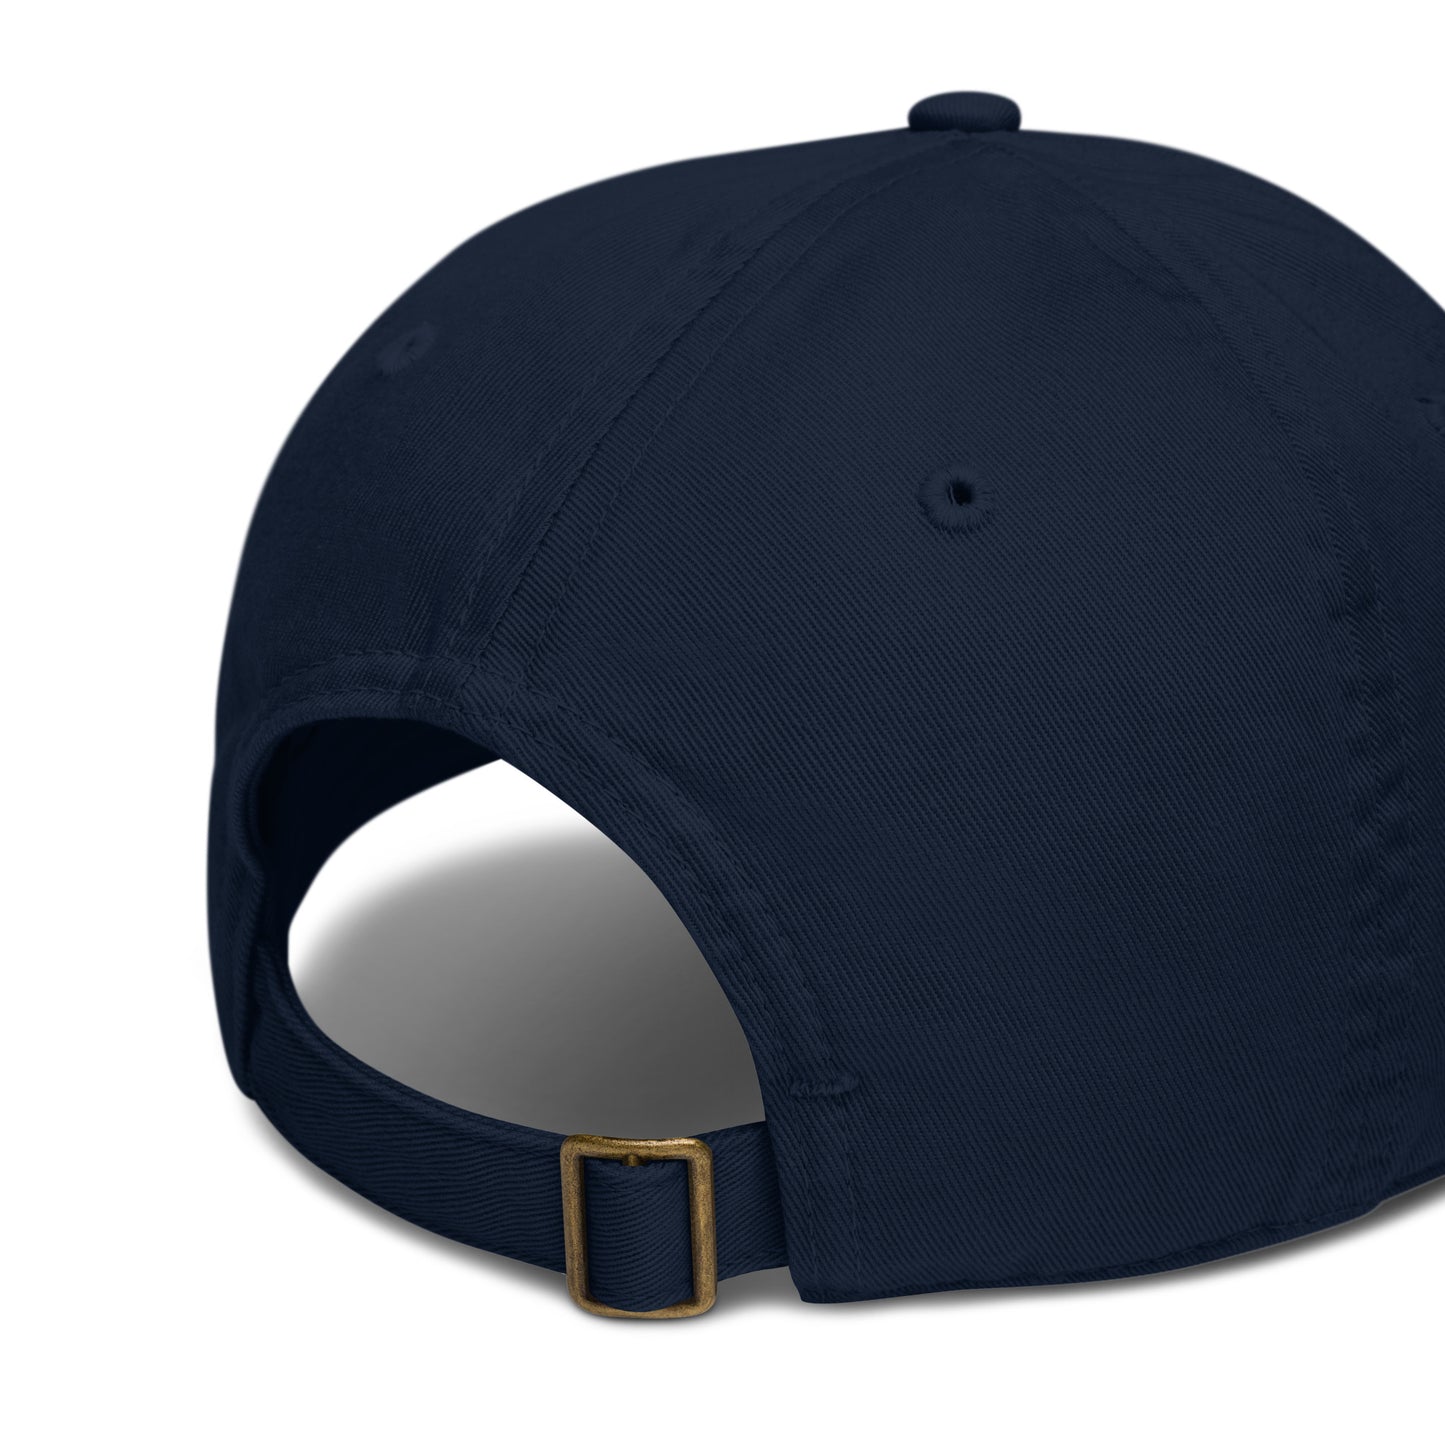 Custom Order: Kuya Embroidered Cotton Baseball Cap